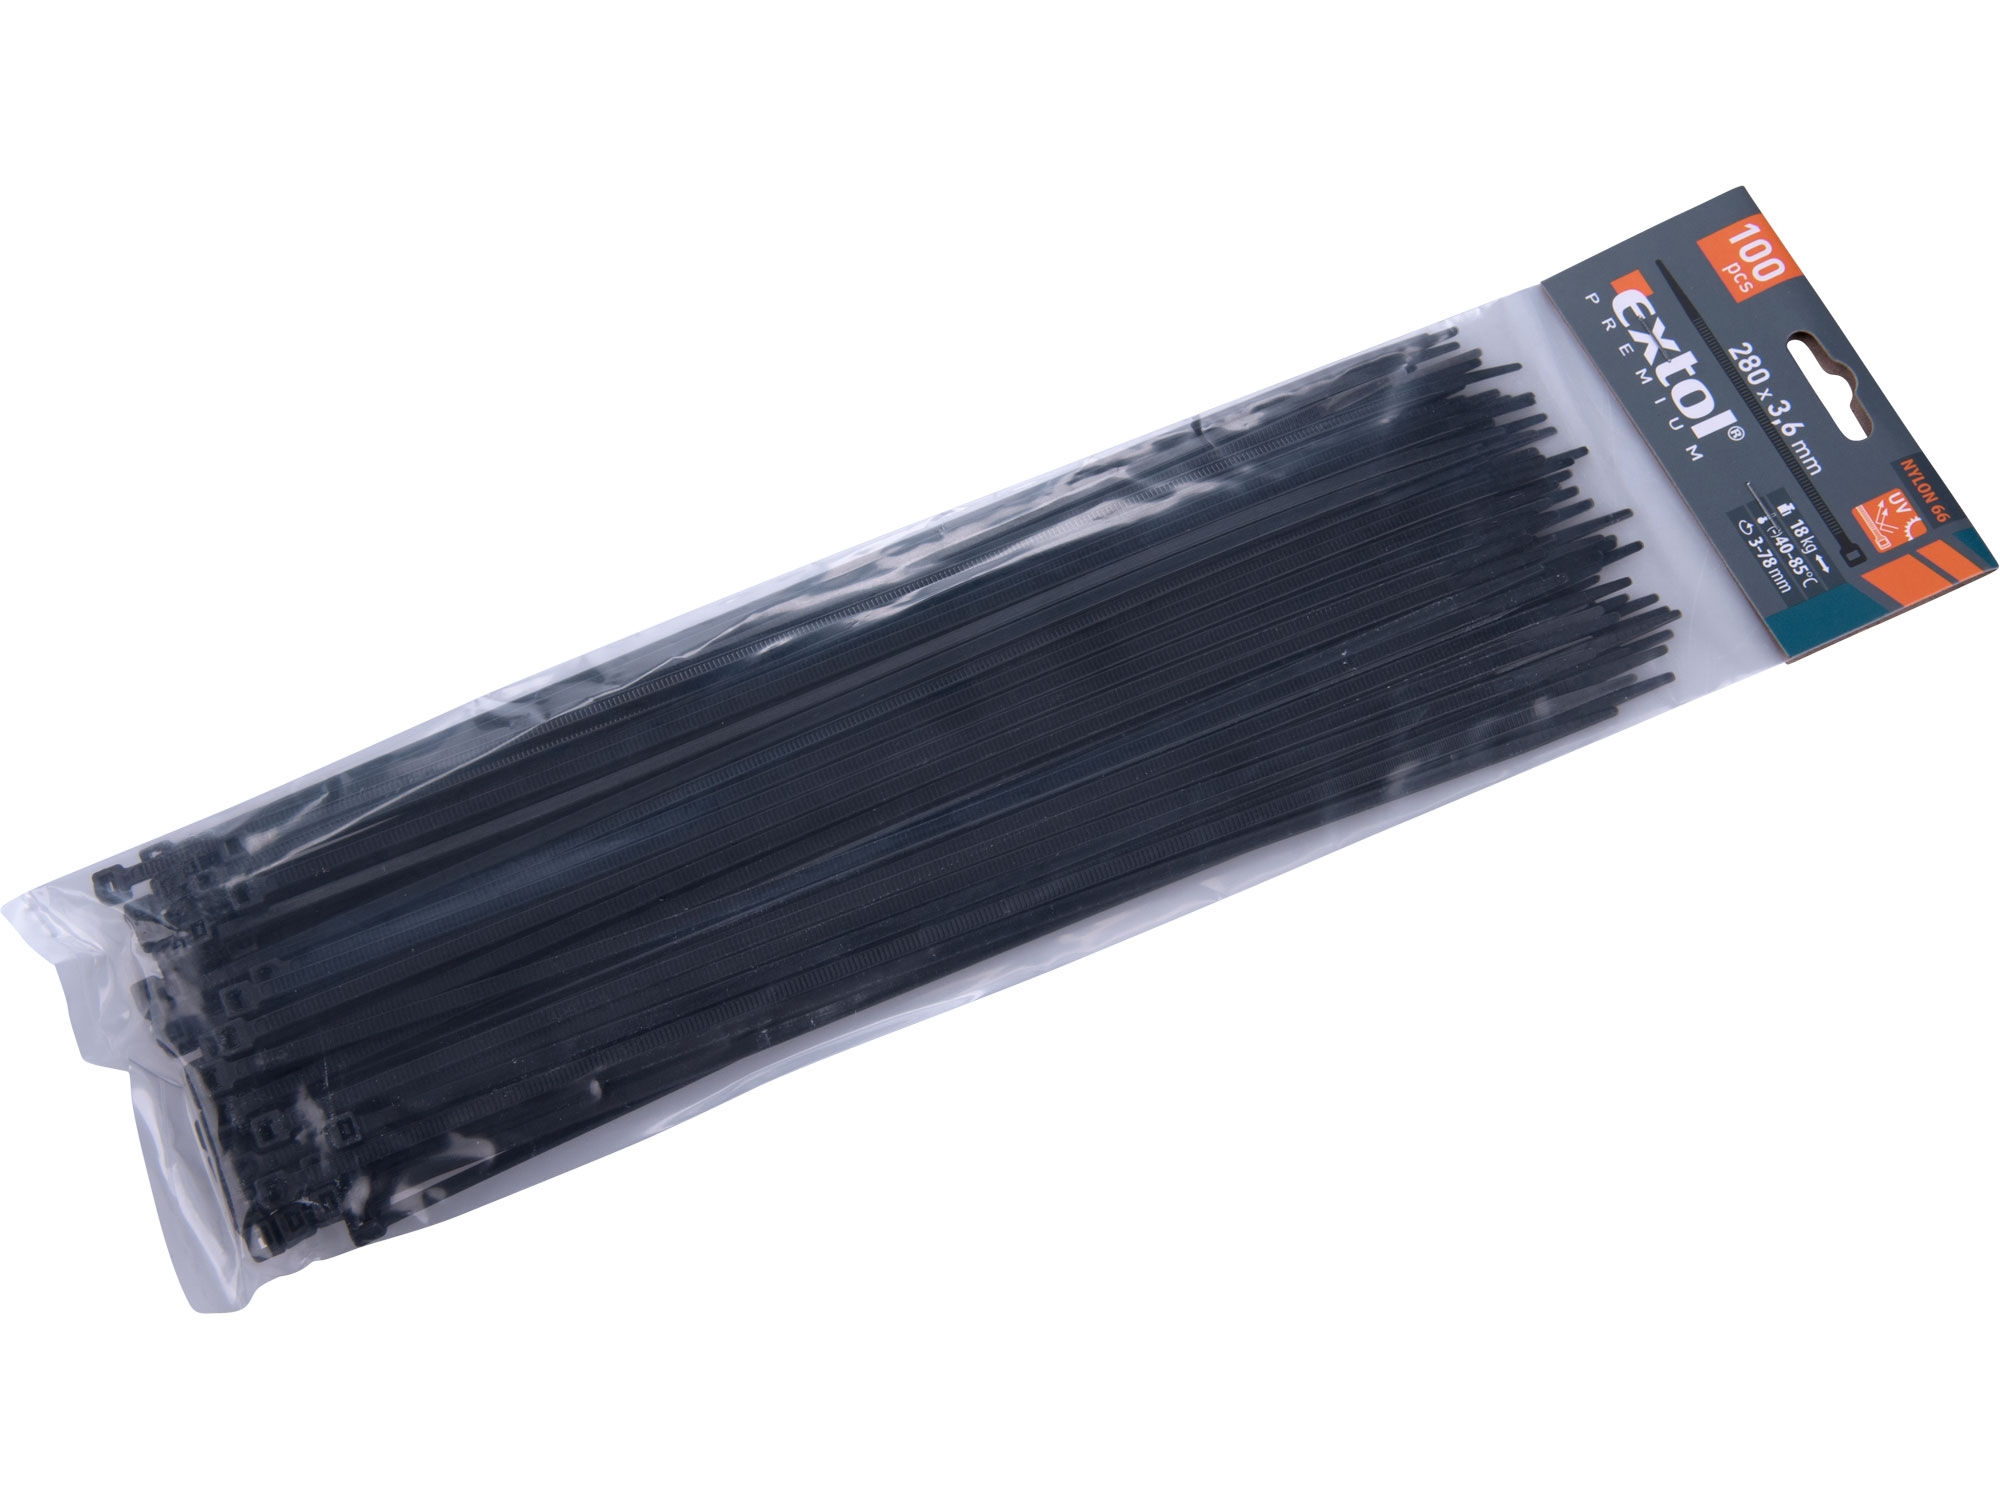 pásky stahovací černé, 280x3,6mm, 100ks, nylon, EXTOL PREMIUM 8856158